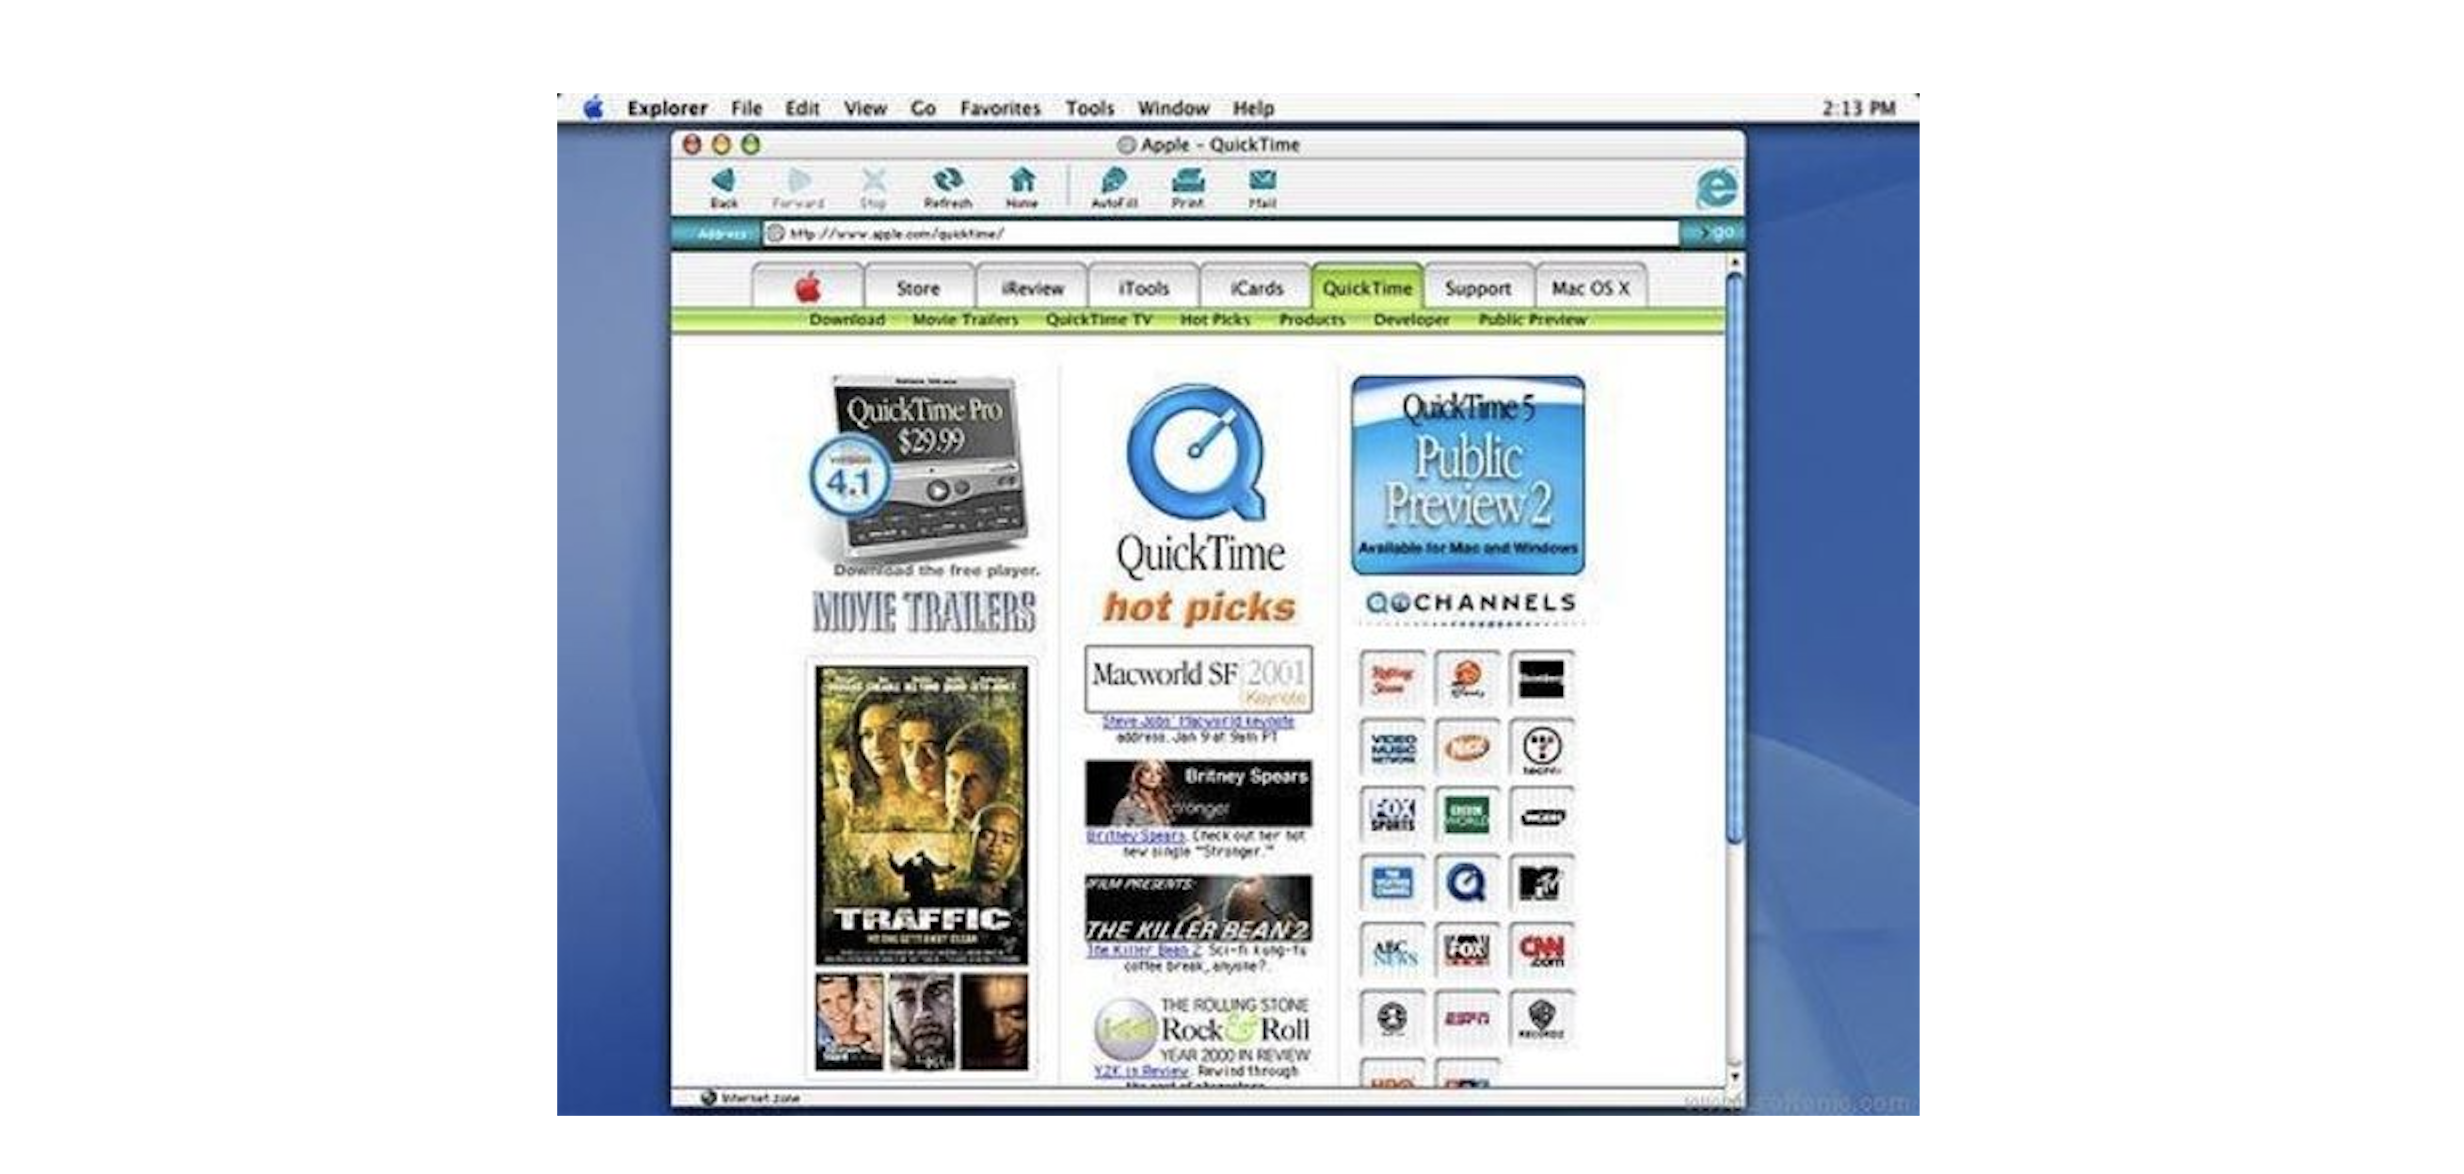 Internet Explorer For Mac Os 10.4.11 Download